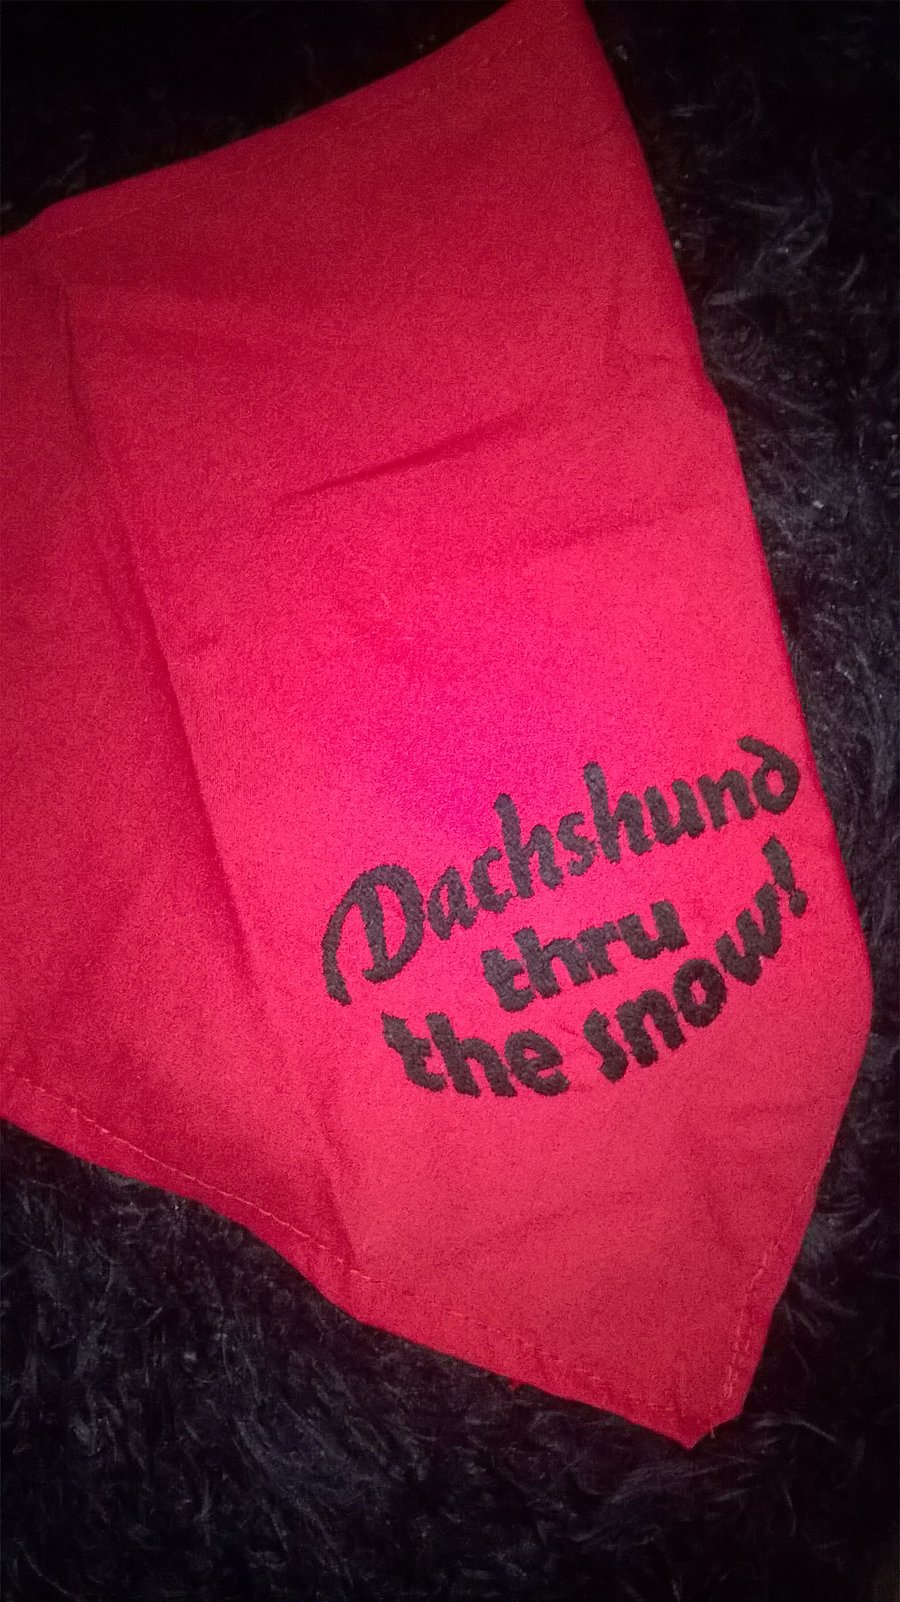 Dog bandana, Small embroidered slogan -Dachshund thru the snow